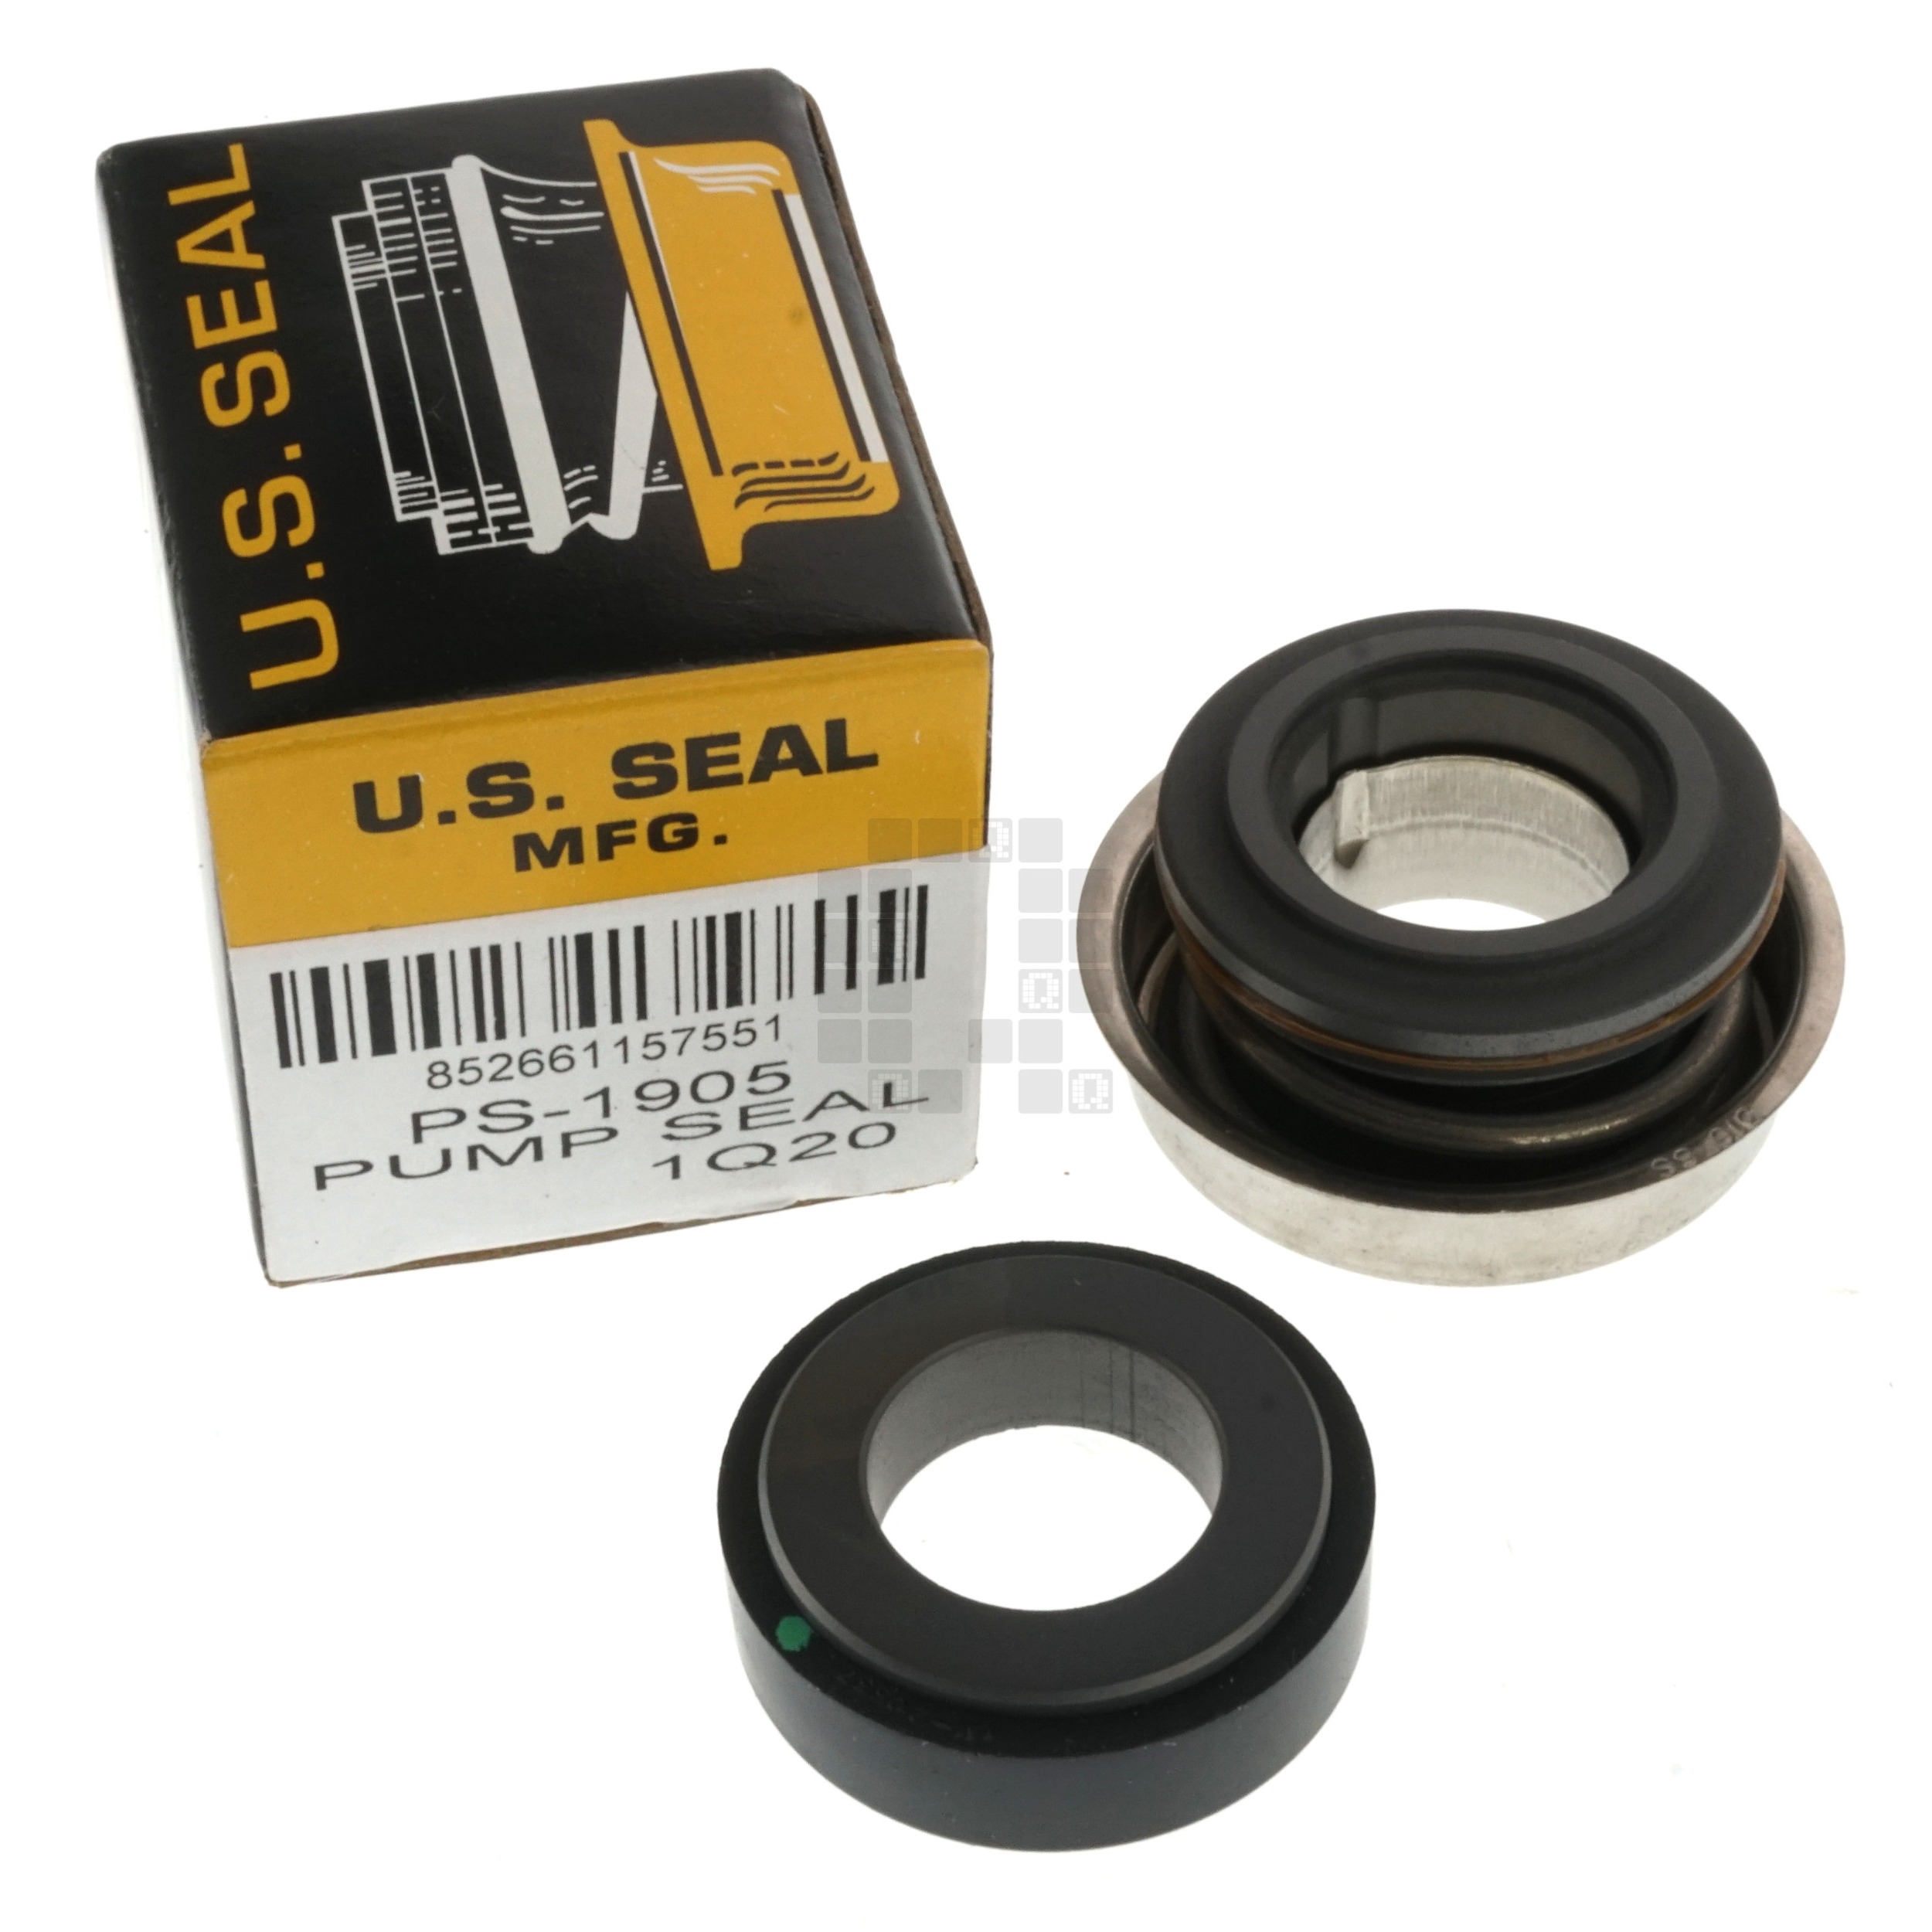 U.S. Seal PS-1905 5/8" Pump Shaft Seal, SCS Series